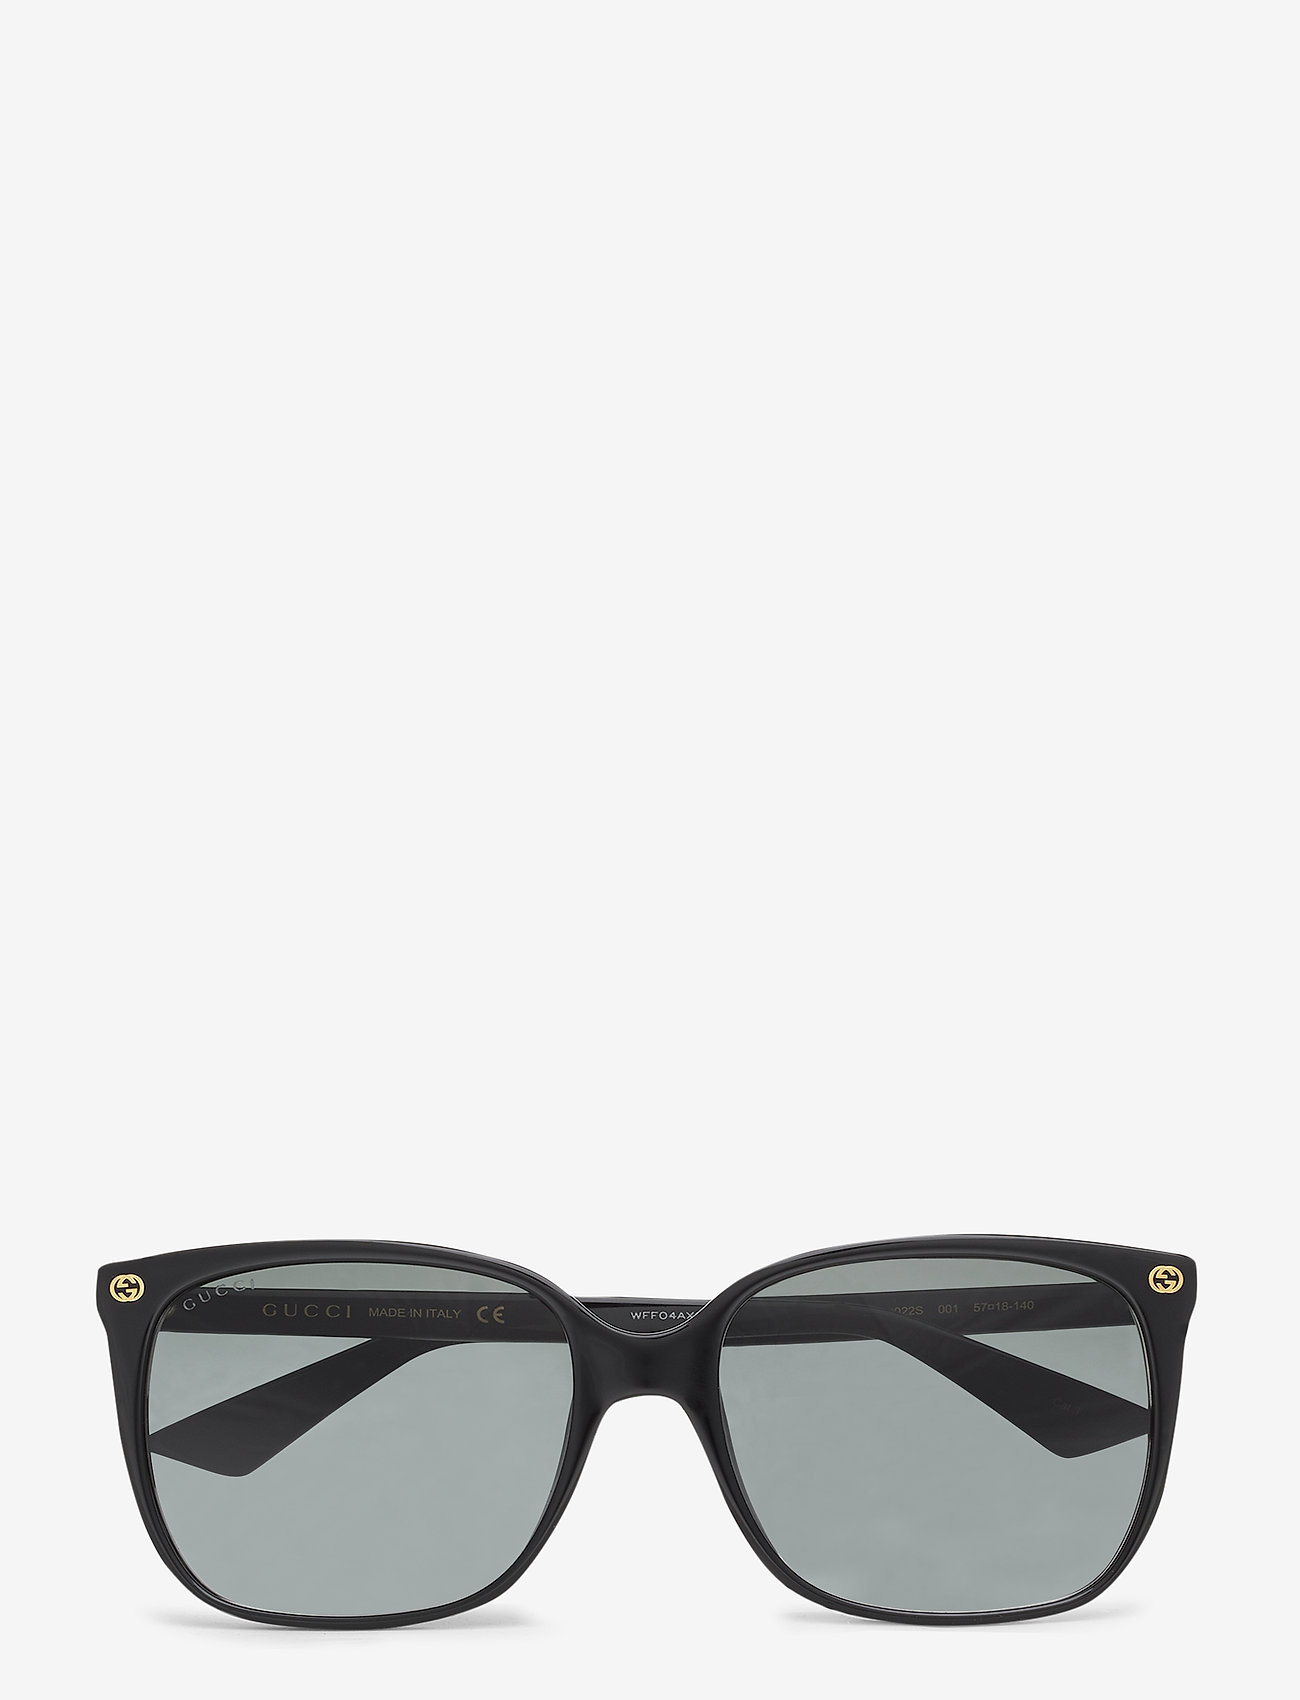 Gucci Sunglasses D-shaped | Boozt.com